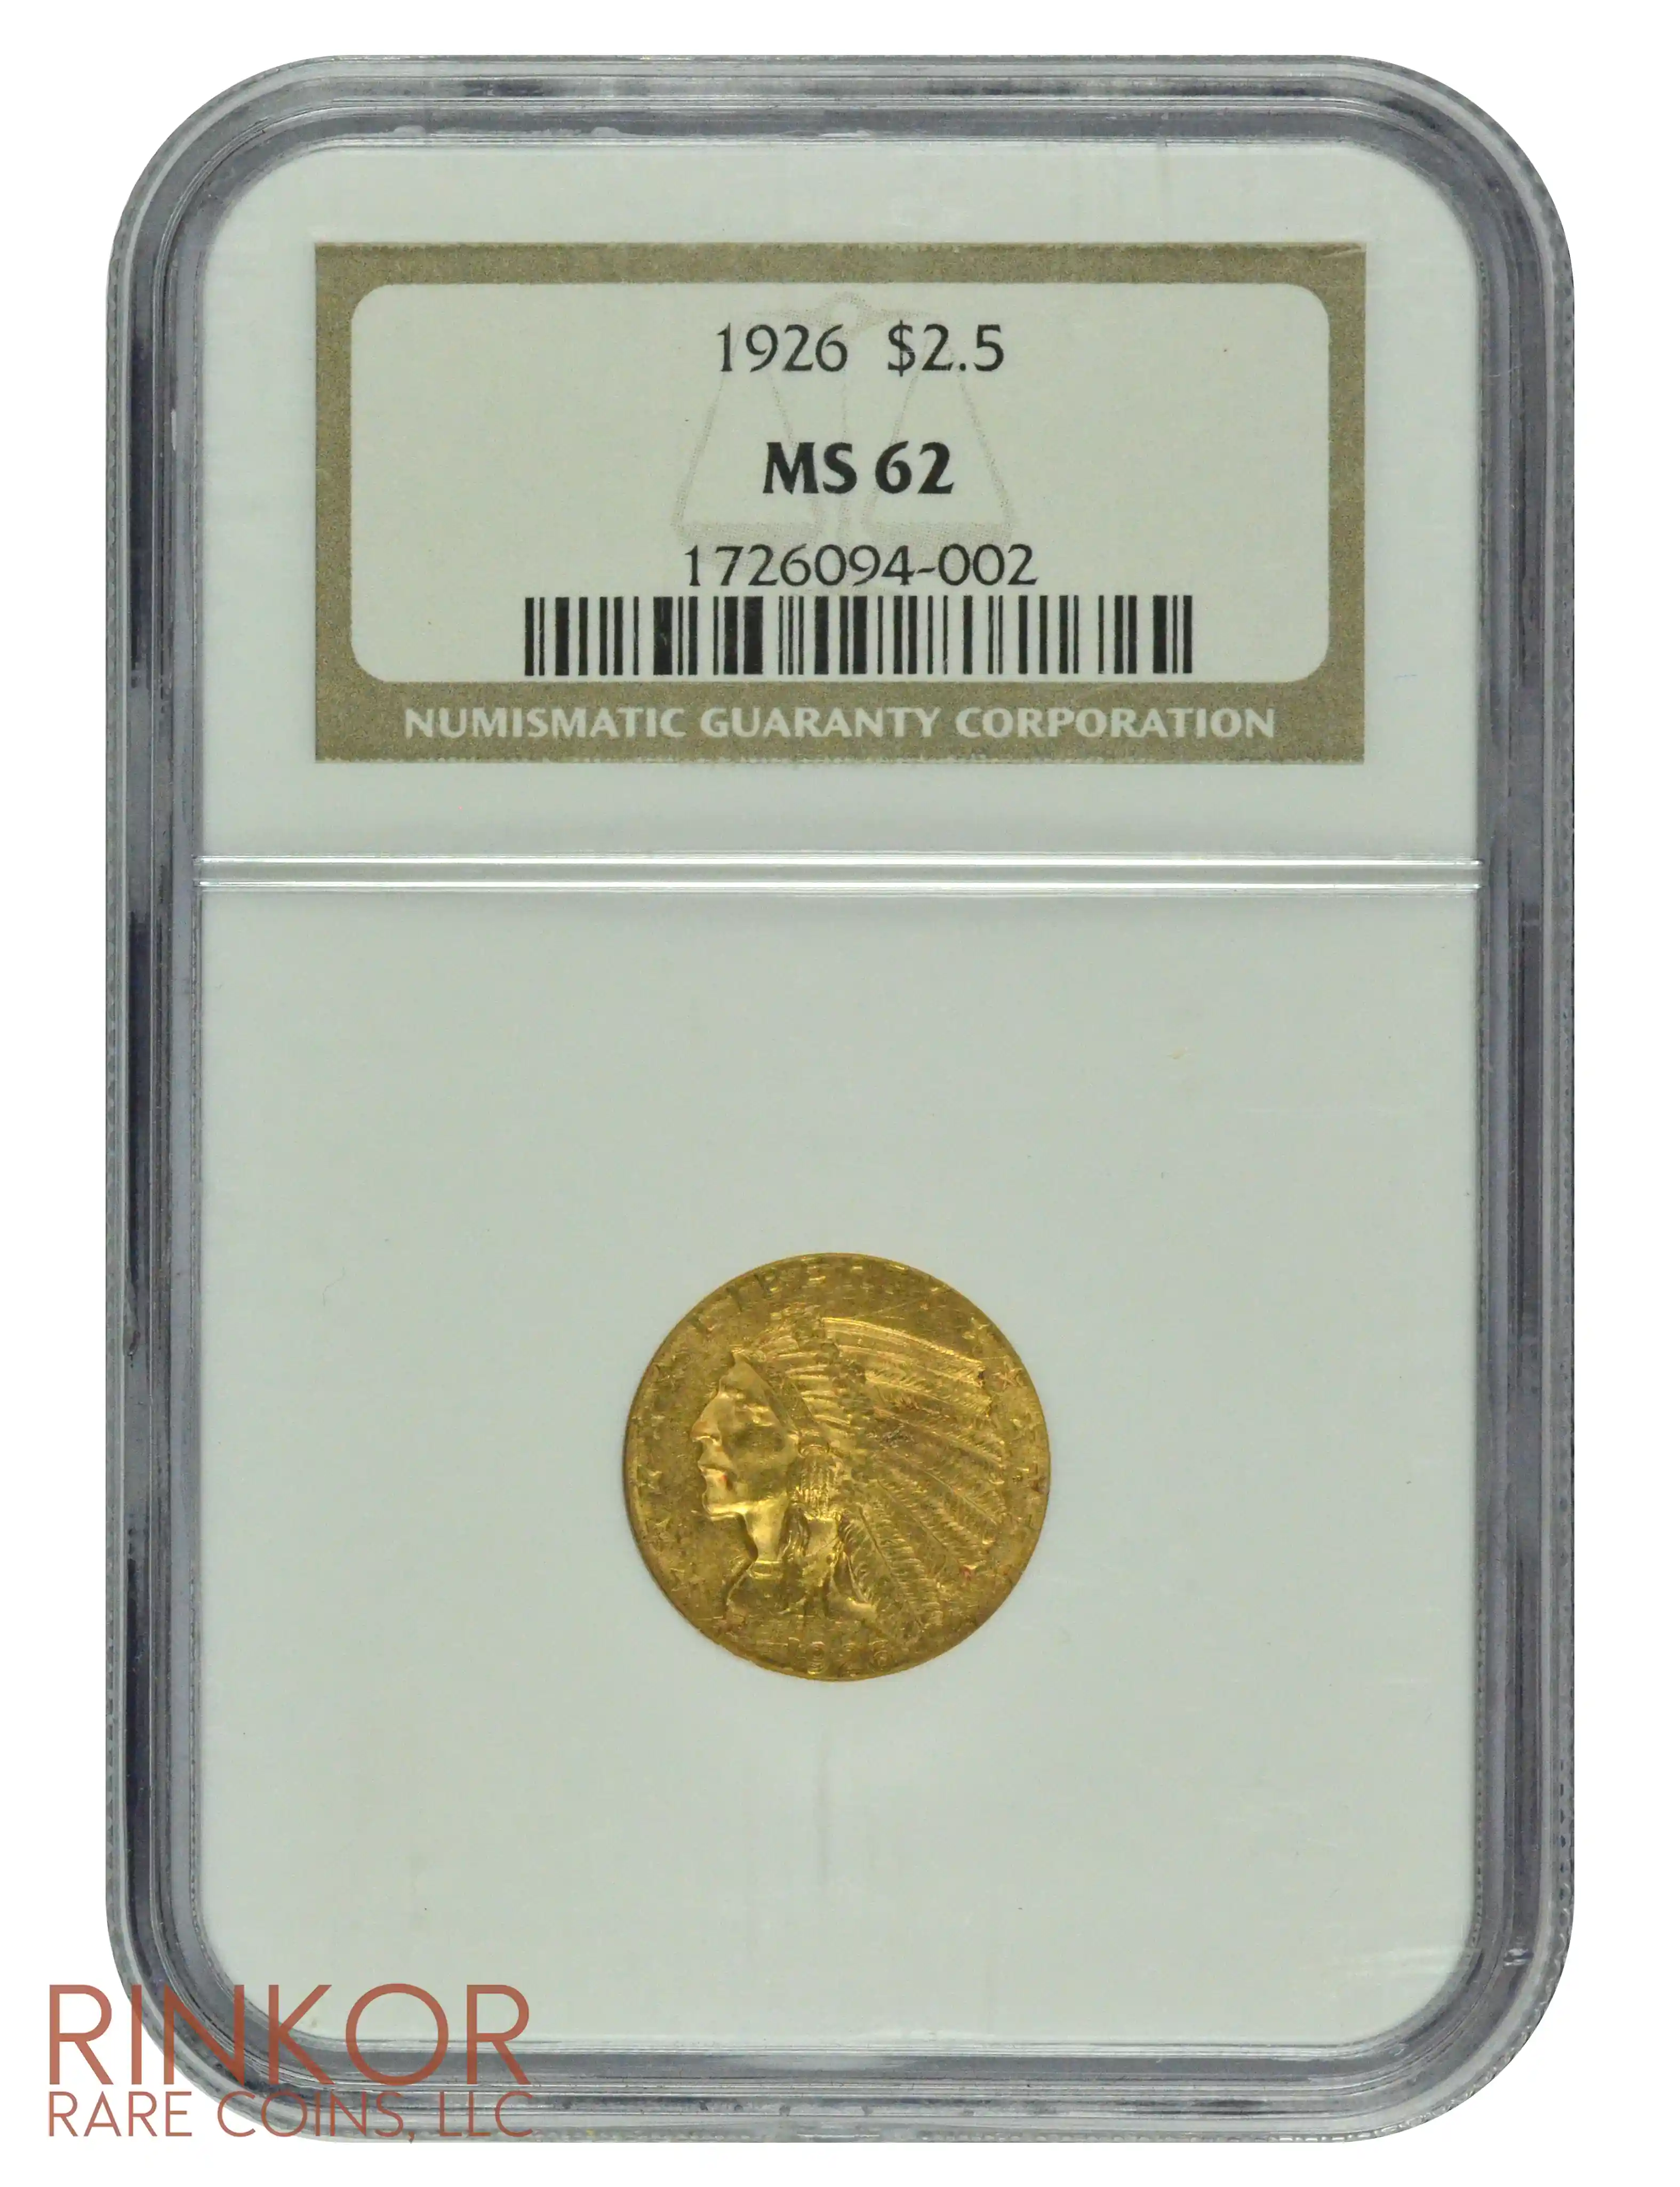 1926 $2.50 Indian Head NGC MS 62 